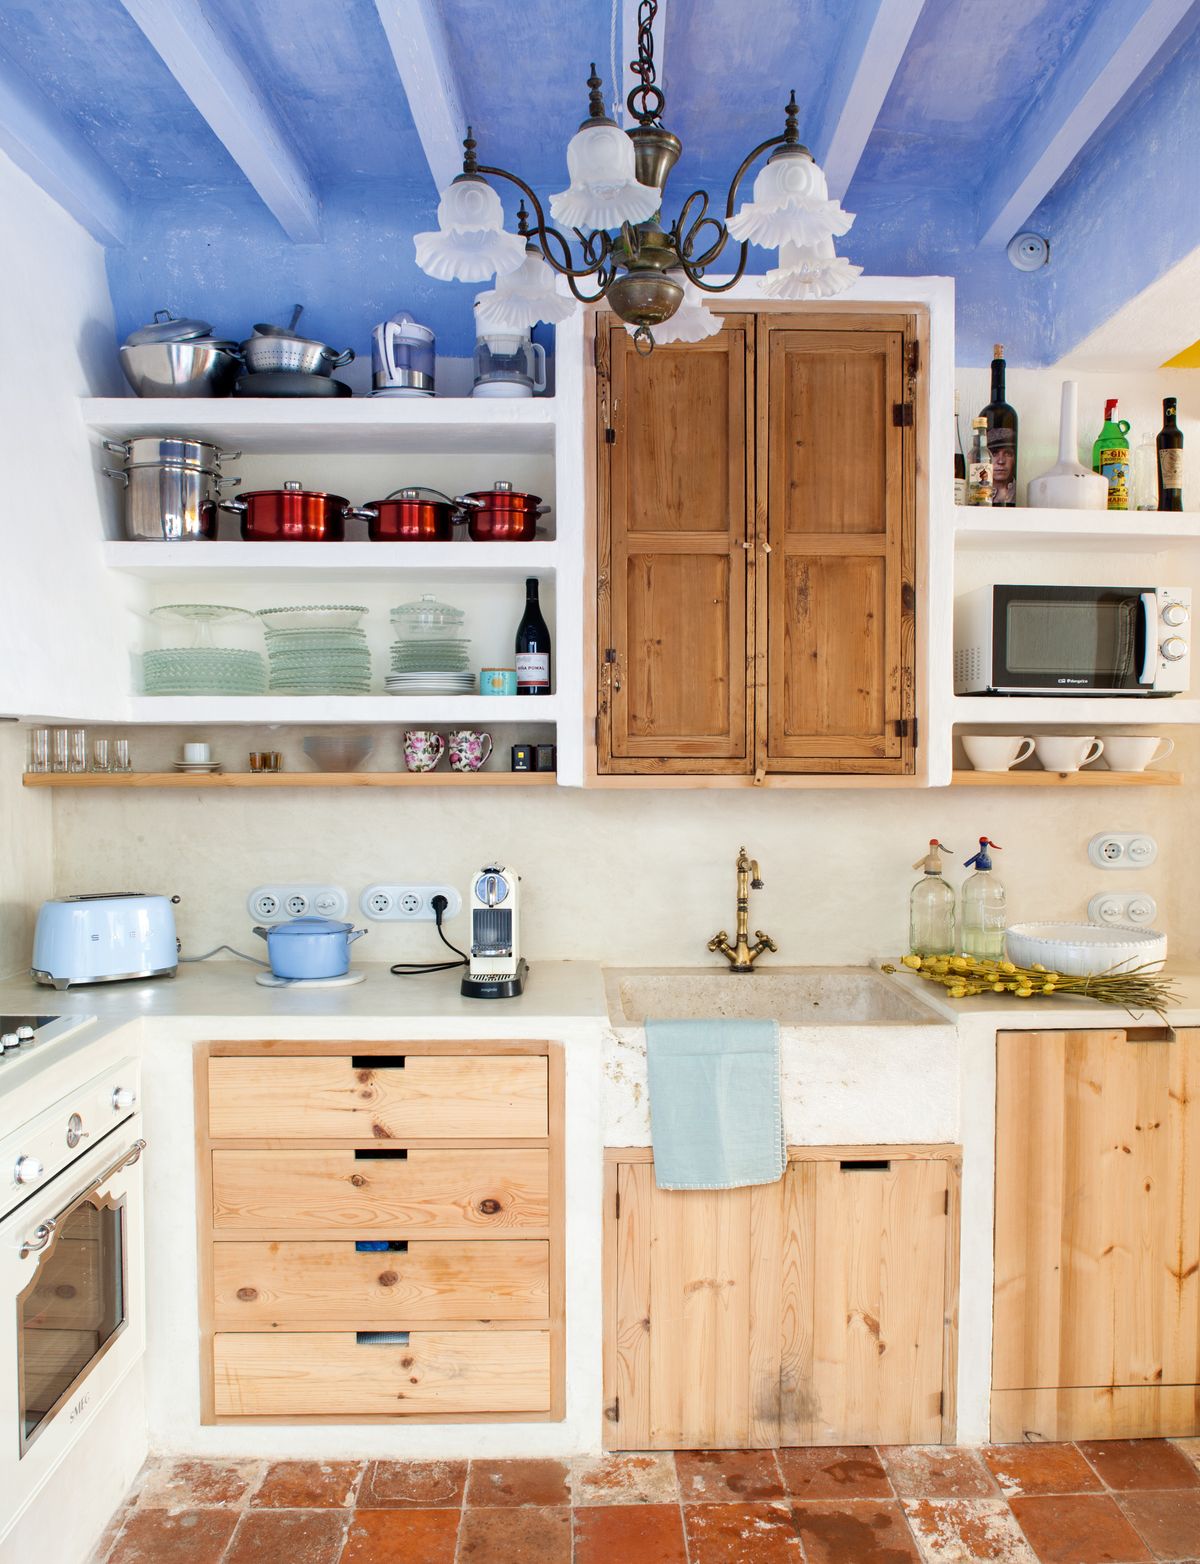 Ivory Kitchen Units Home Decorating Ideas Interior Design